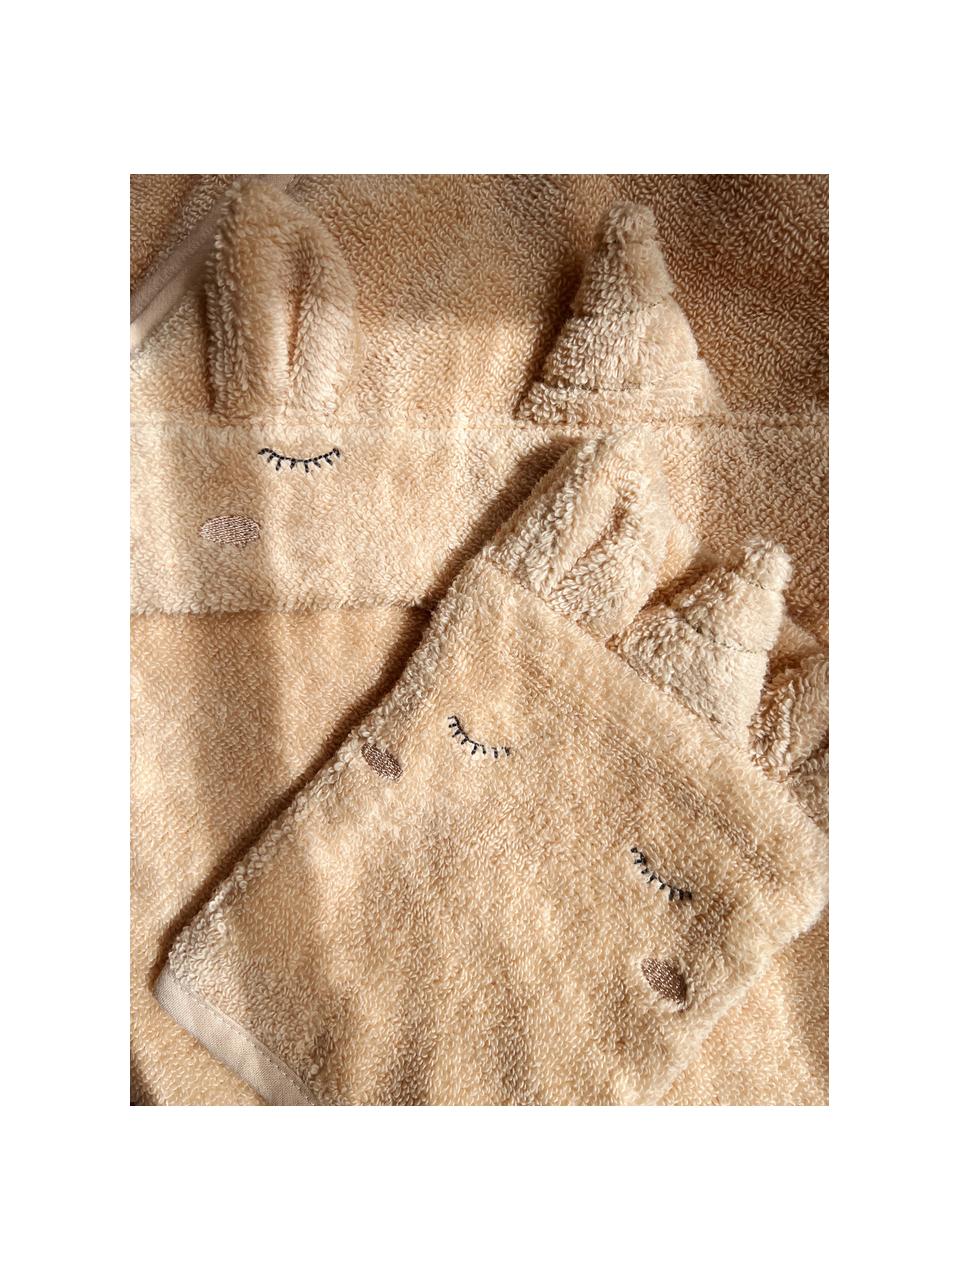 Manoplas de baño de algodón Unicorn, 3 uds., 100% algodón, Beige claro, turrón, terracota, An 13 x L 20 cm